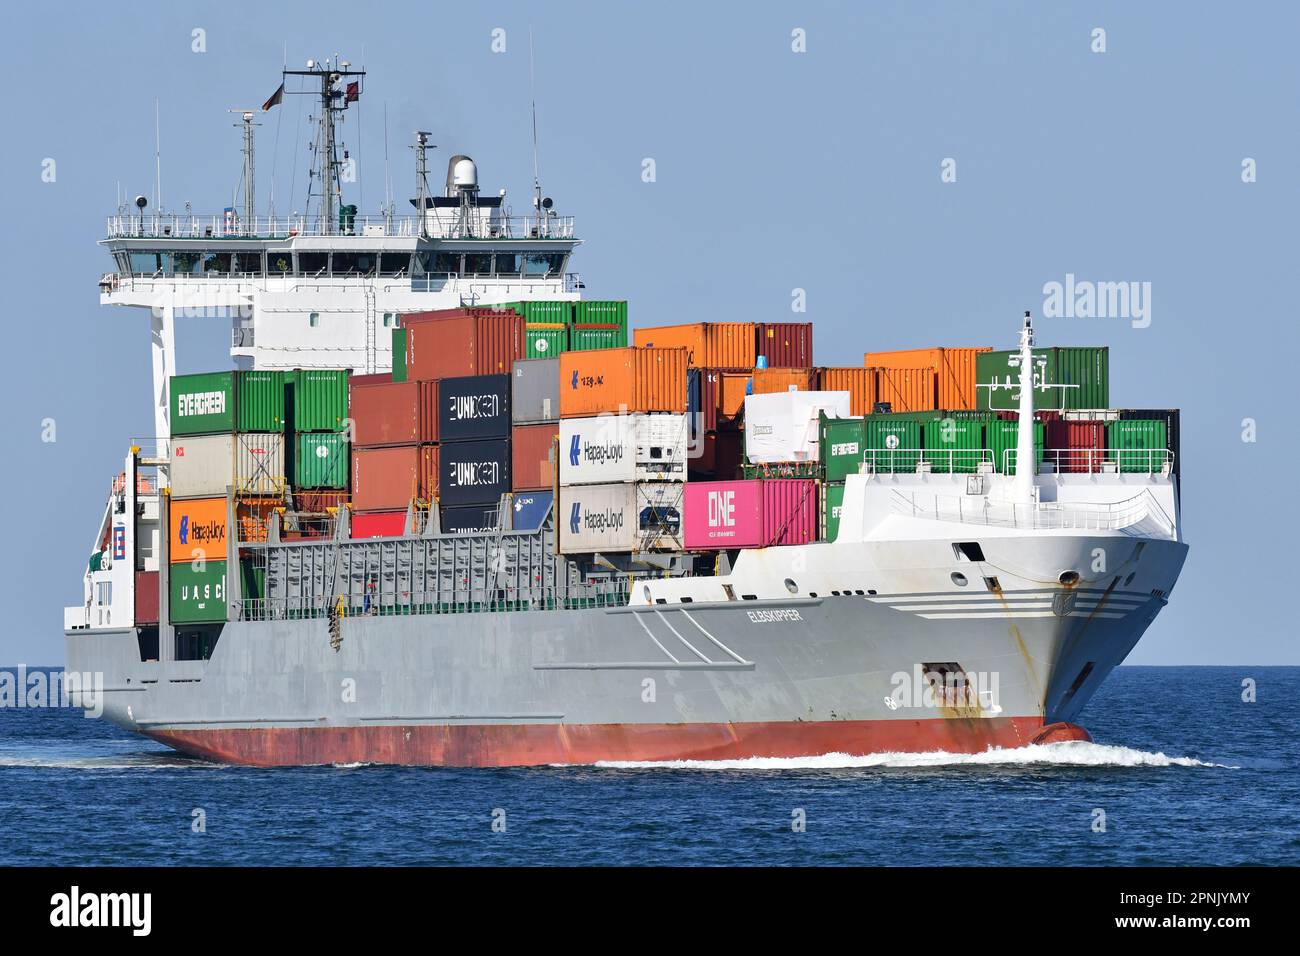 Containership ELBSKIPPER at the Kiel Fjord Stock Photo